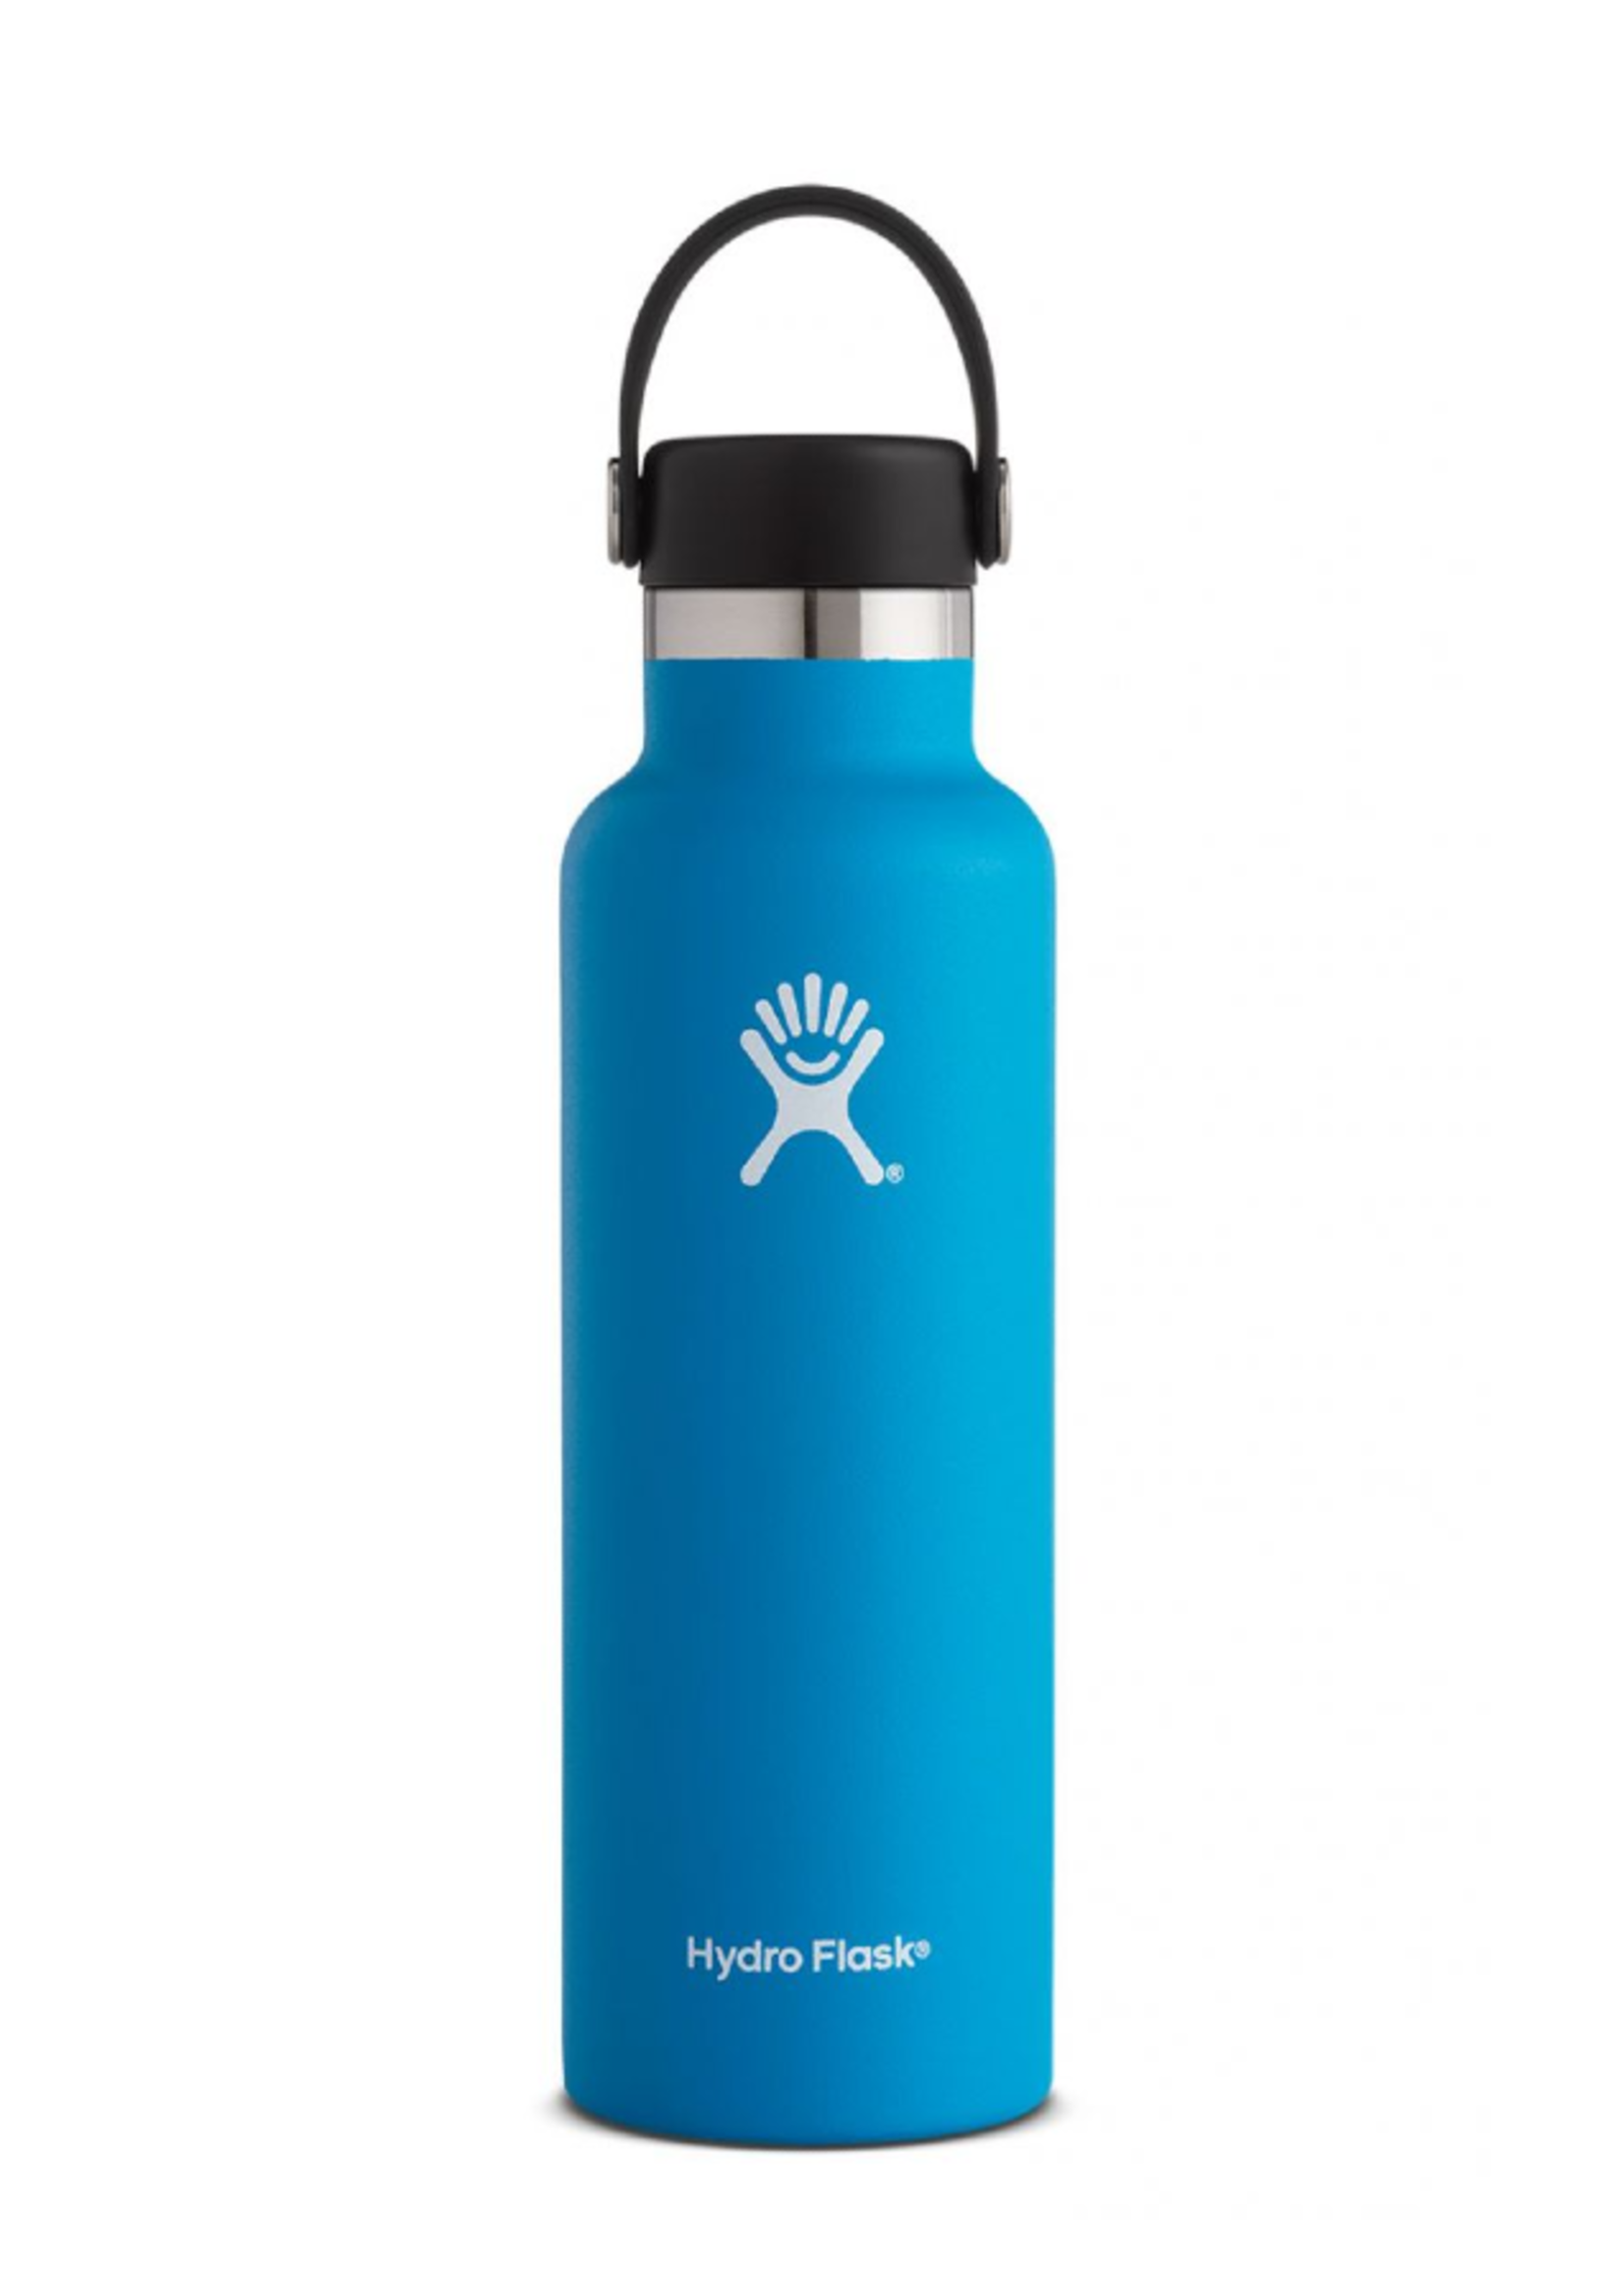 https://cdn.shoplightspeed.com/shops/645788/files/59993161/1652x2313x2/hydroflask-hydro-flask-21-oz-standard-mouth-water.jpg